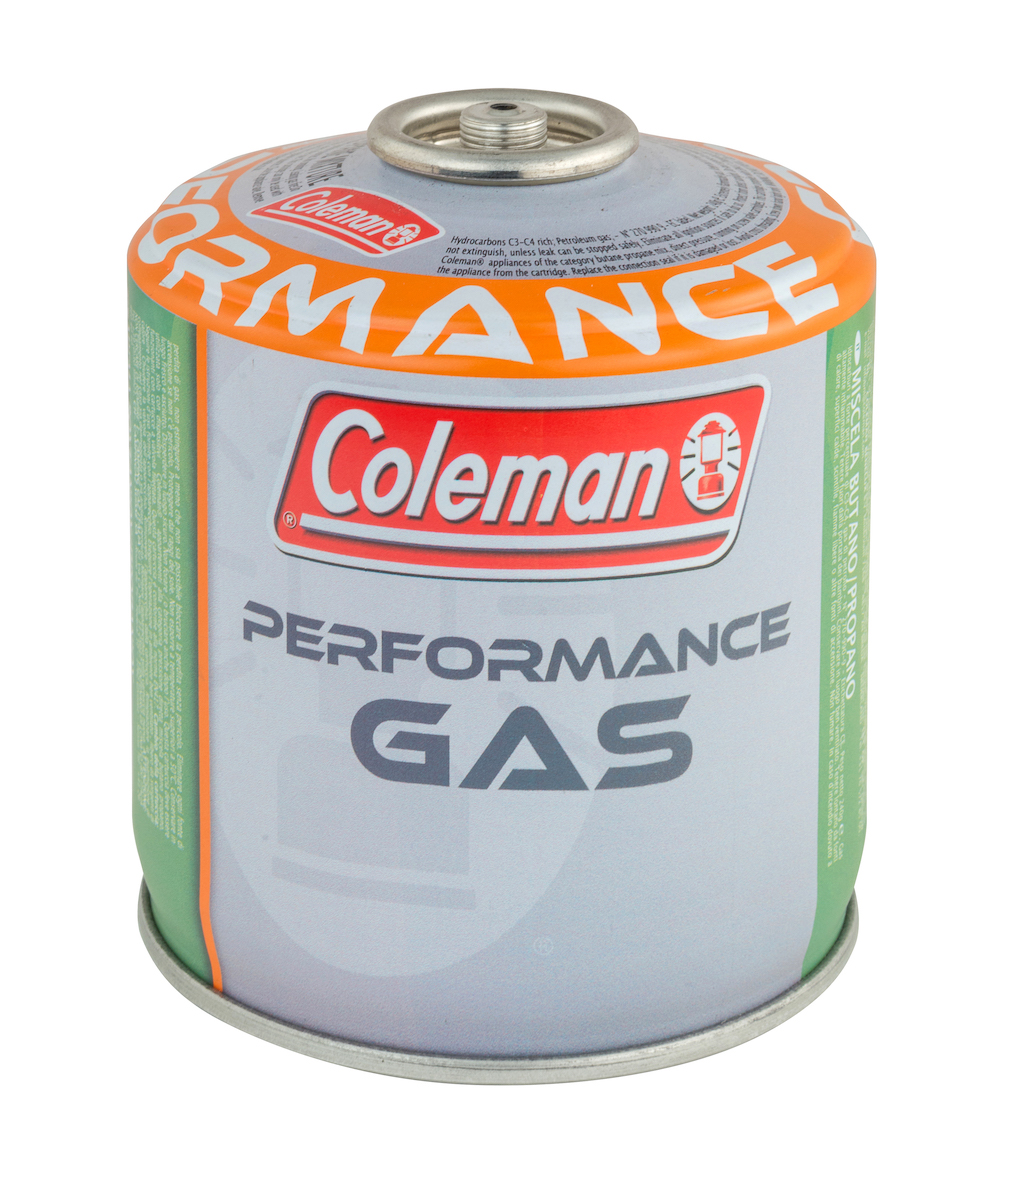 Gas-Ventilkartusche Coleman 300 Performance